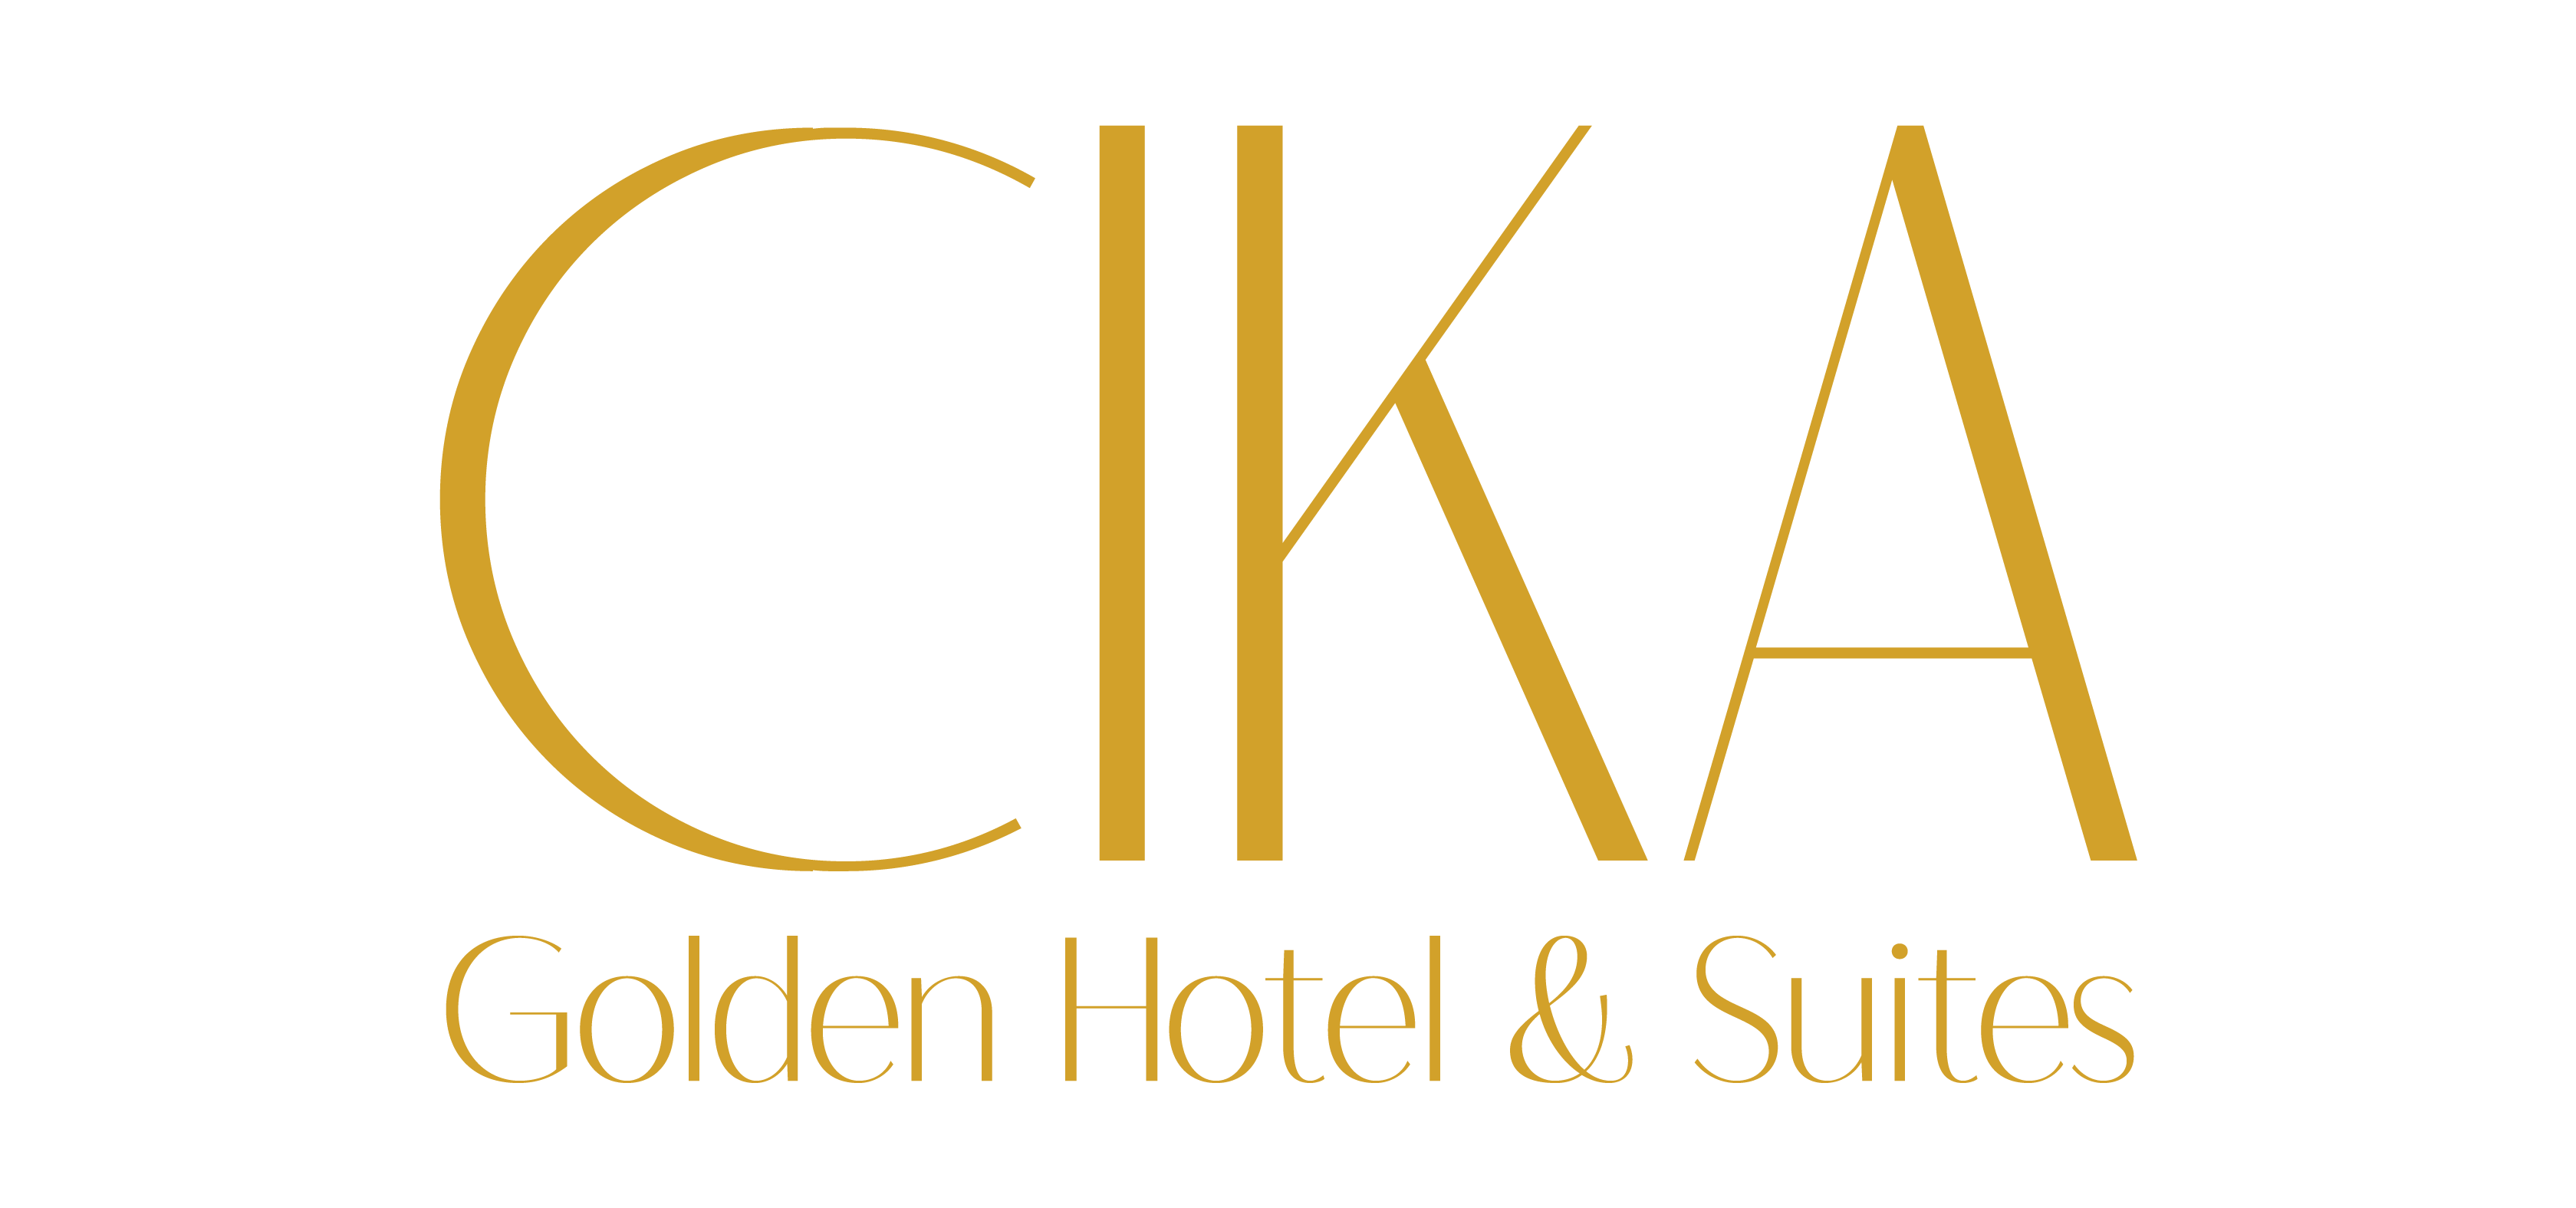 CIKA Golden Hotel Et Suites